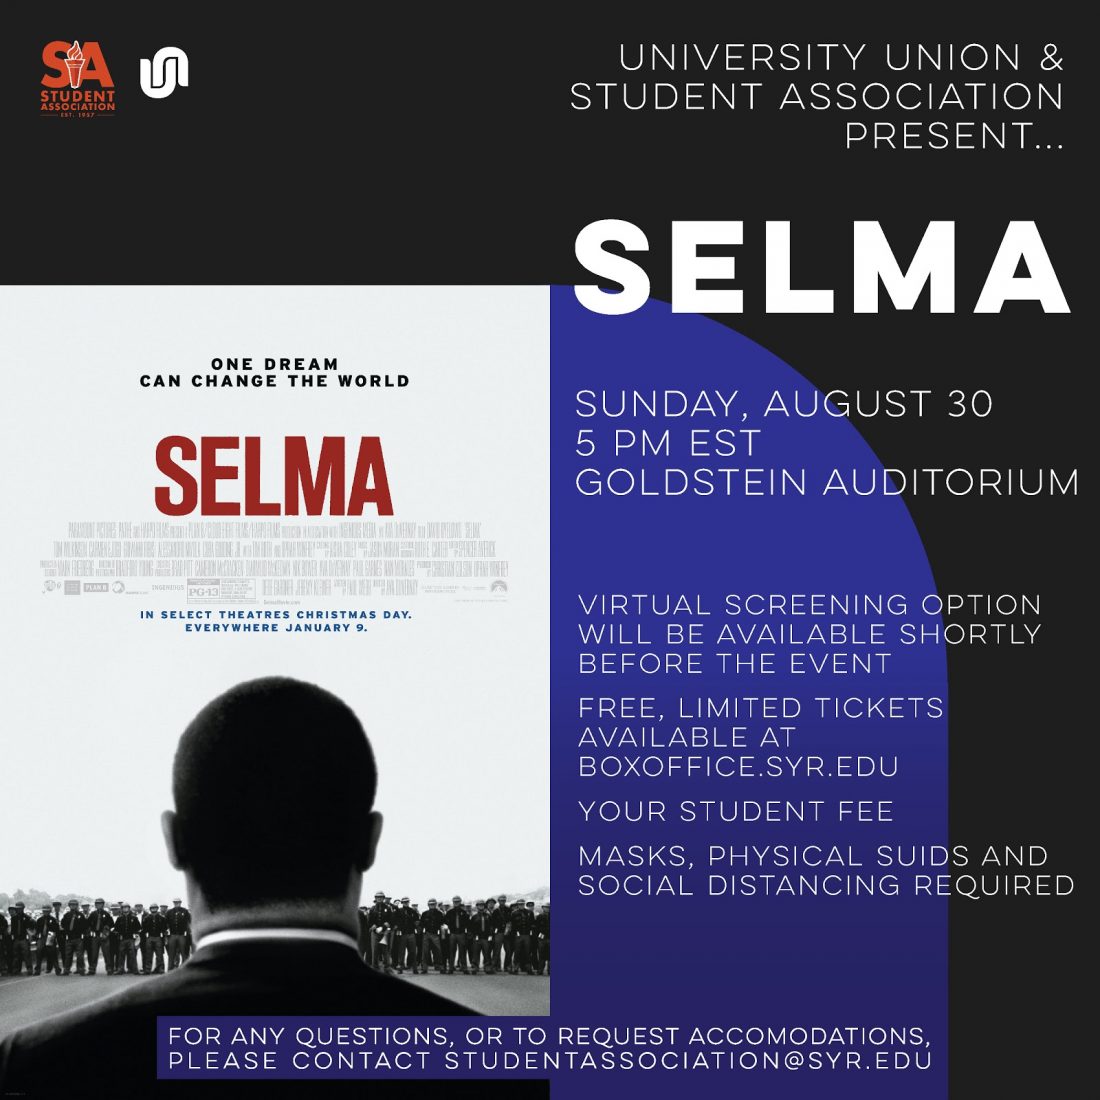 University Union and Student Association Present... SELMA